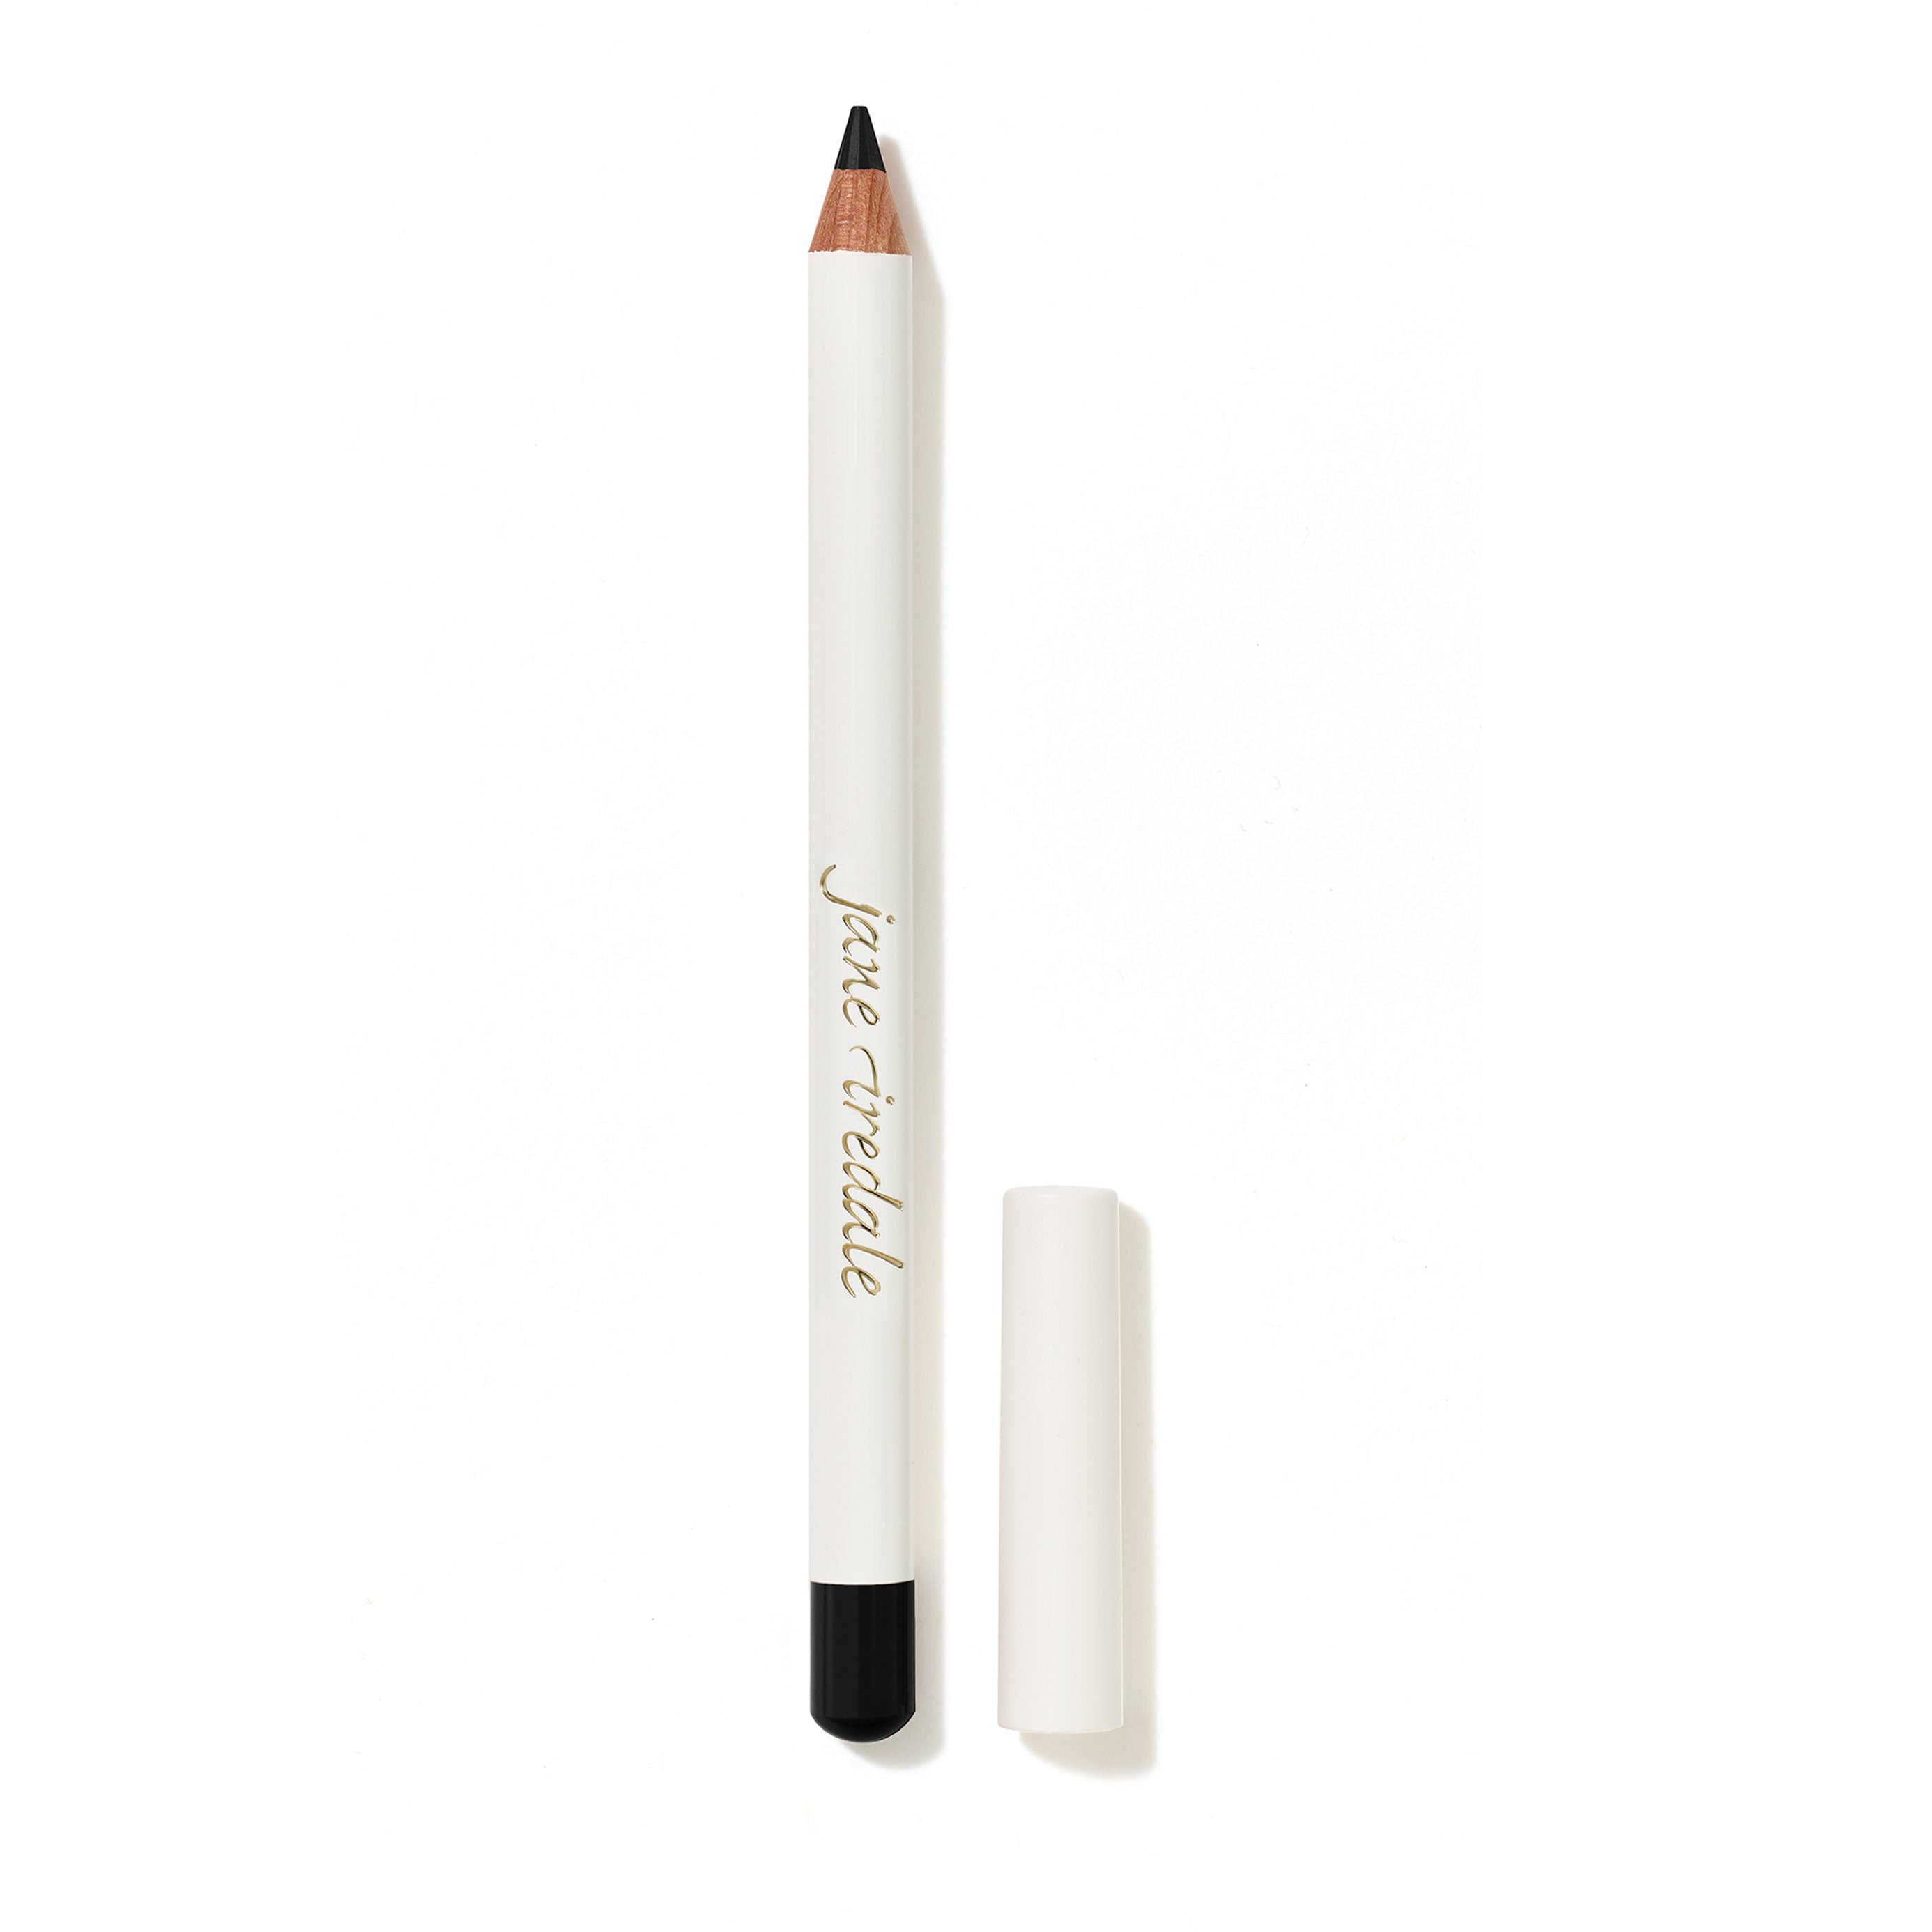 Jane Iredale Lip Pencil, Basic Black - 0.04 oz